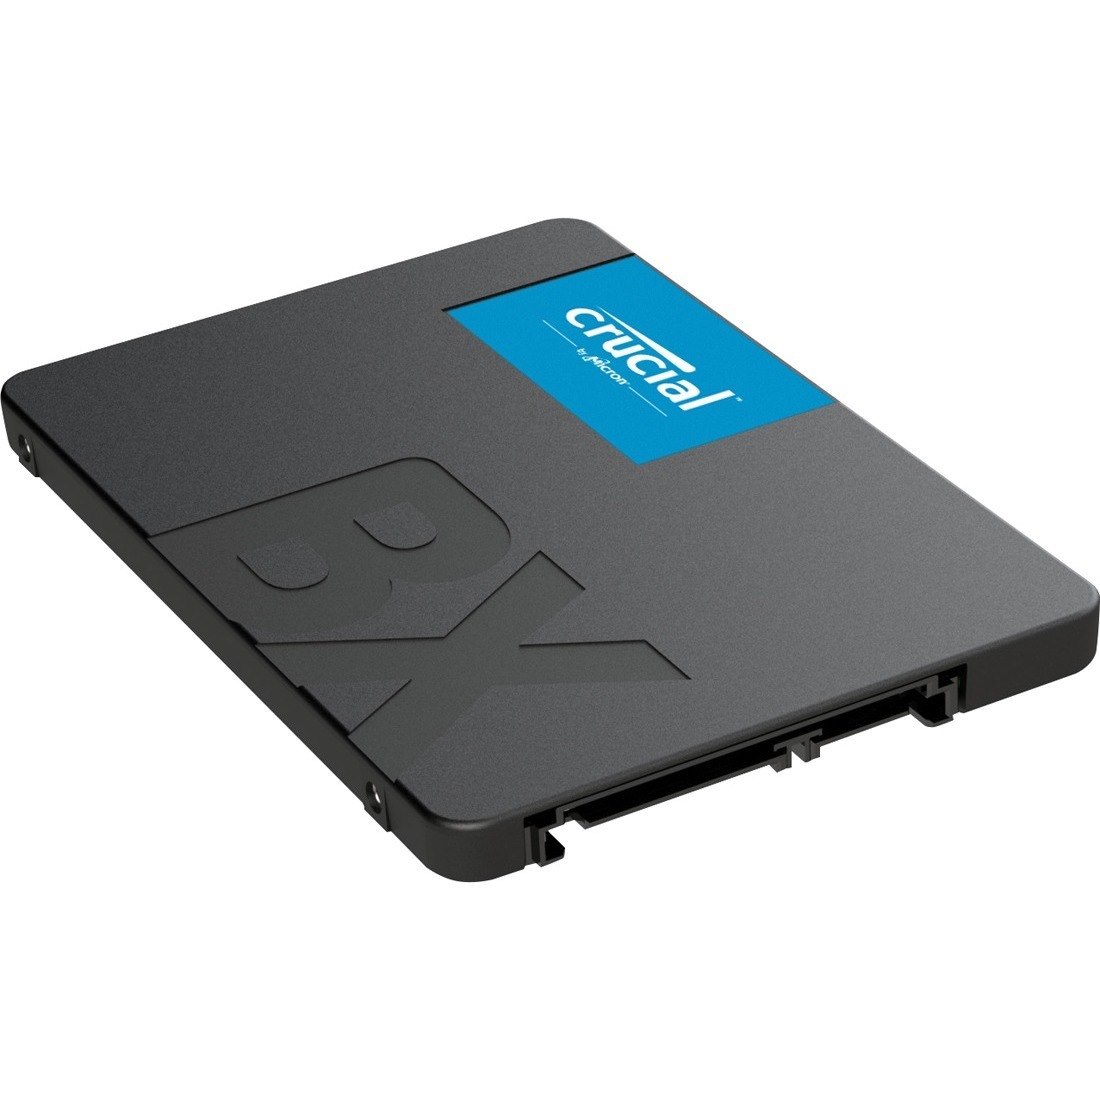 Crucial Cru SSD 240GB-CT240BX500SSD1